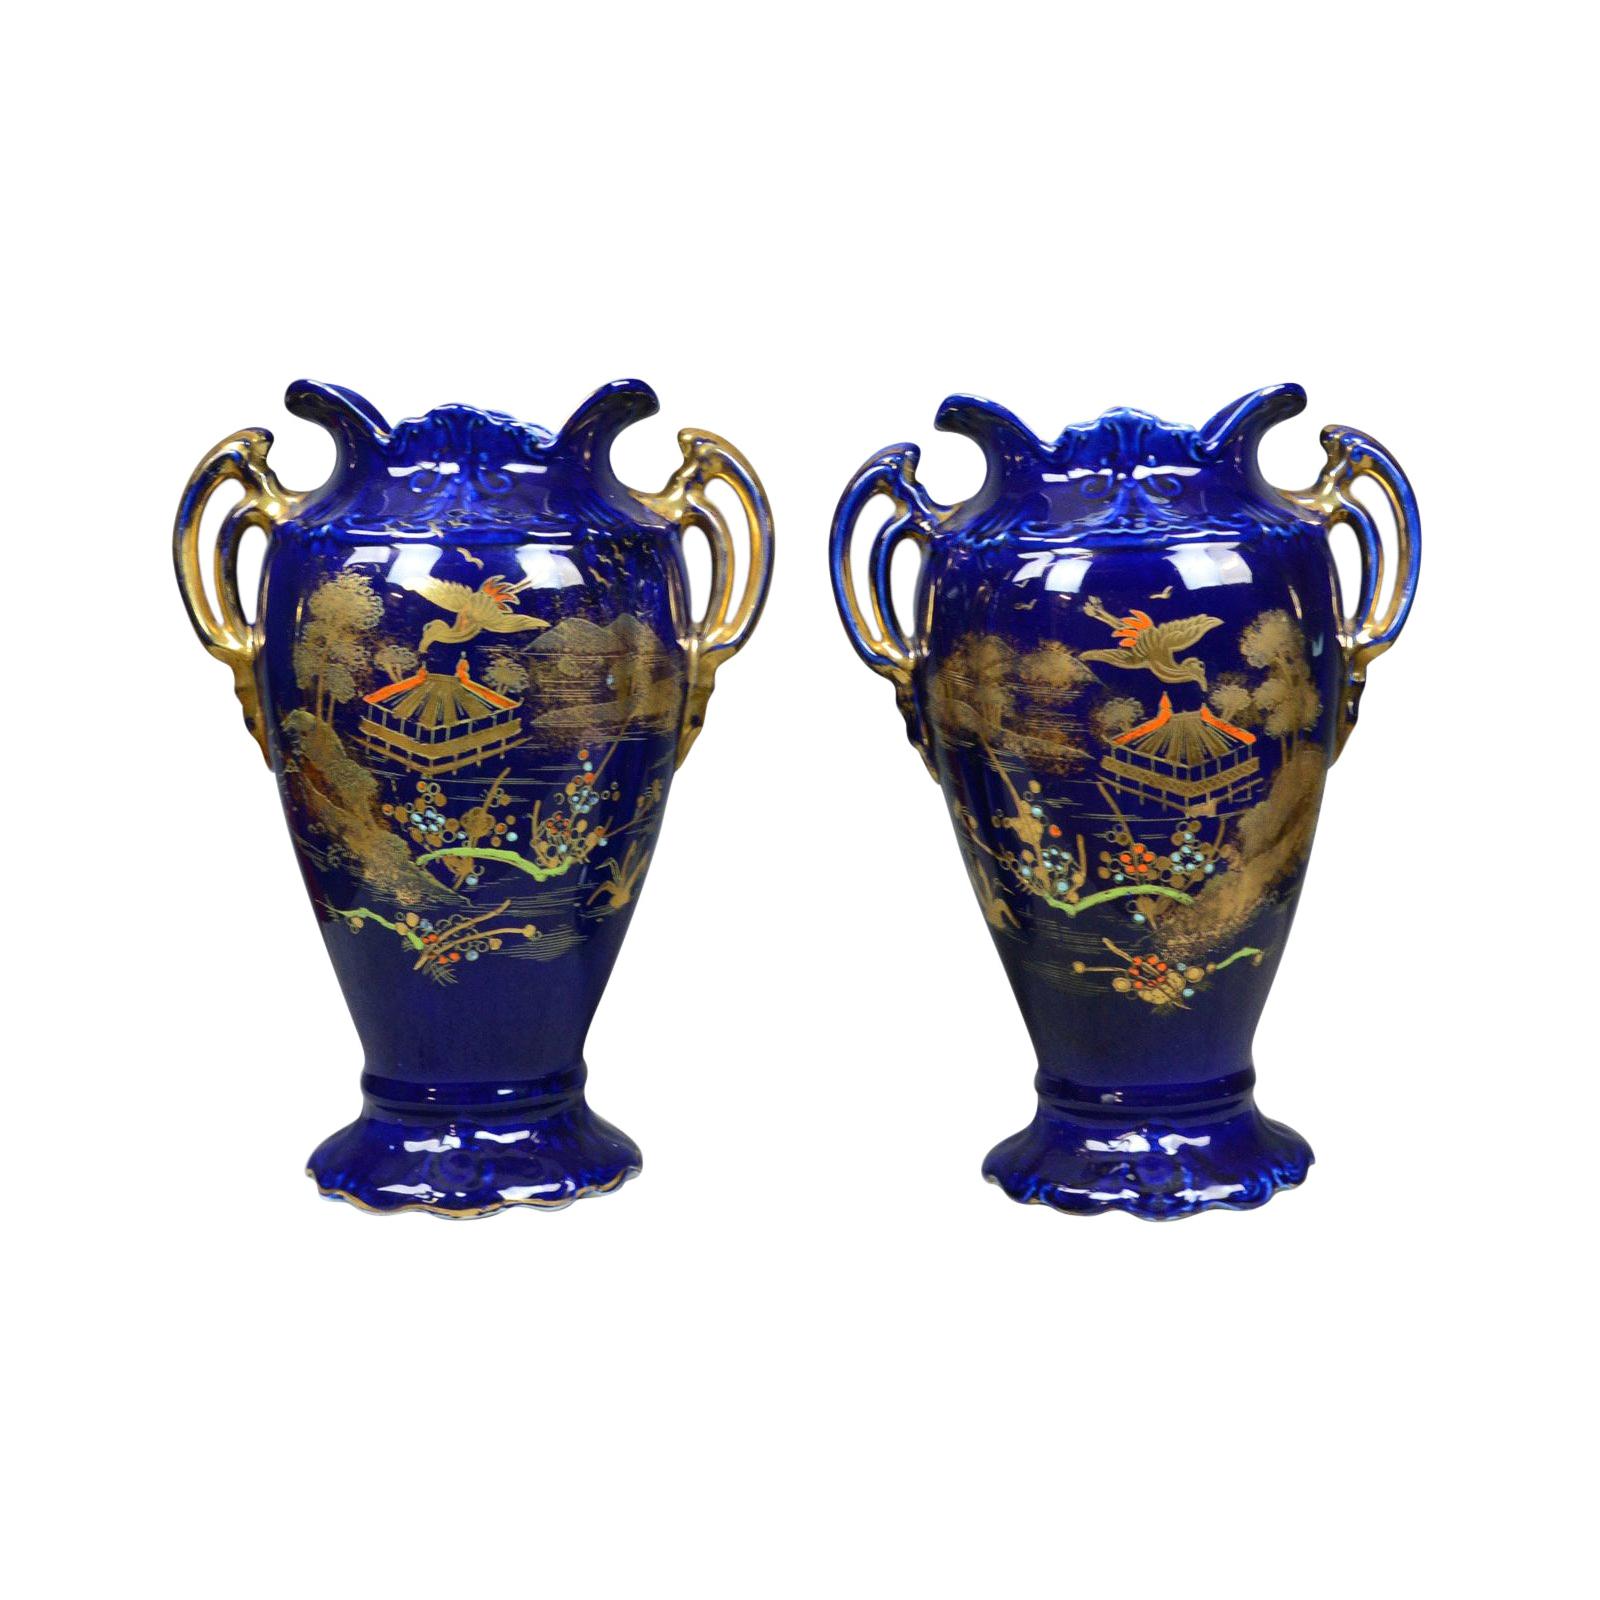 Dekorative Balustervasen, Keramikurnen, Gold, Blau, spätes 20. Jahrhundert, Paar